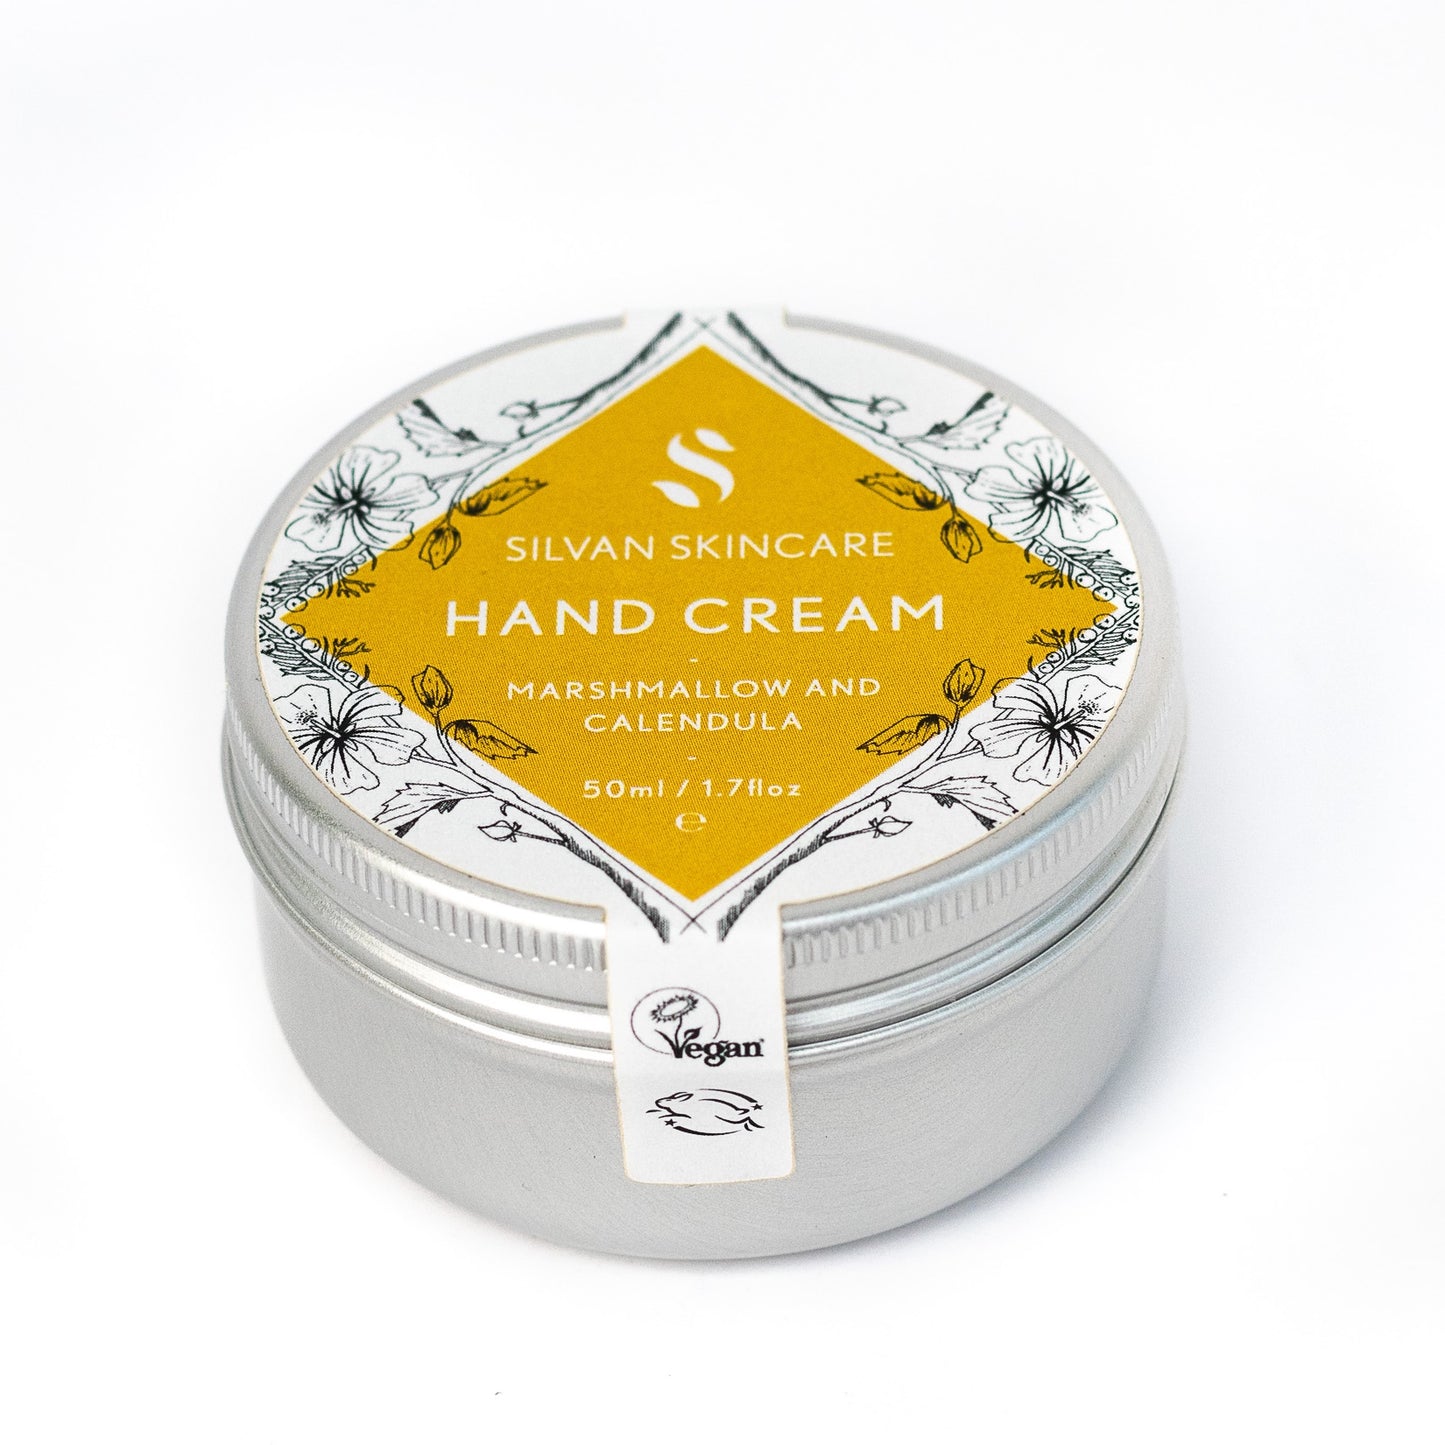 Silvan Skincare Marshmallow & Calendula Natural Hand Cream 50ml Jar